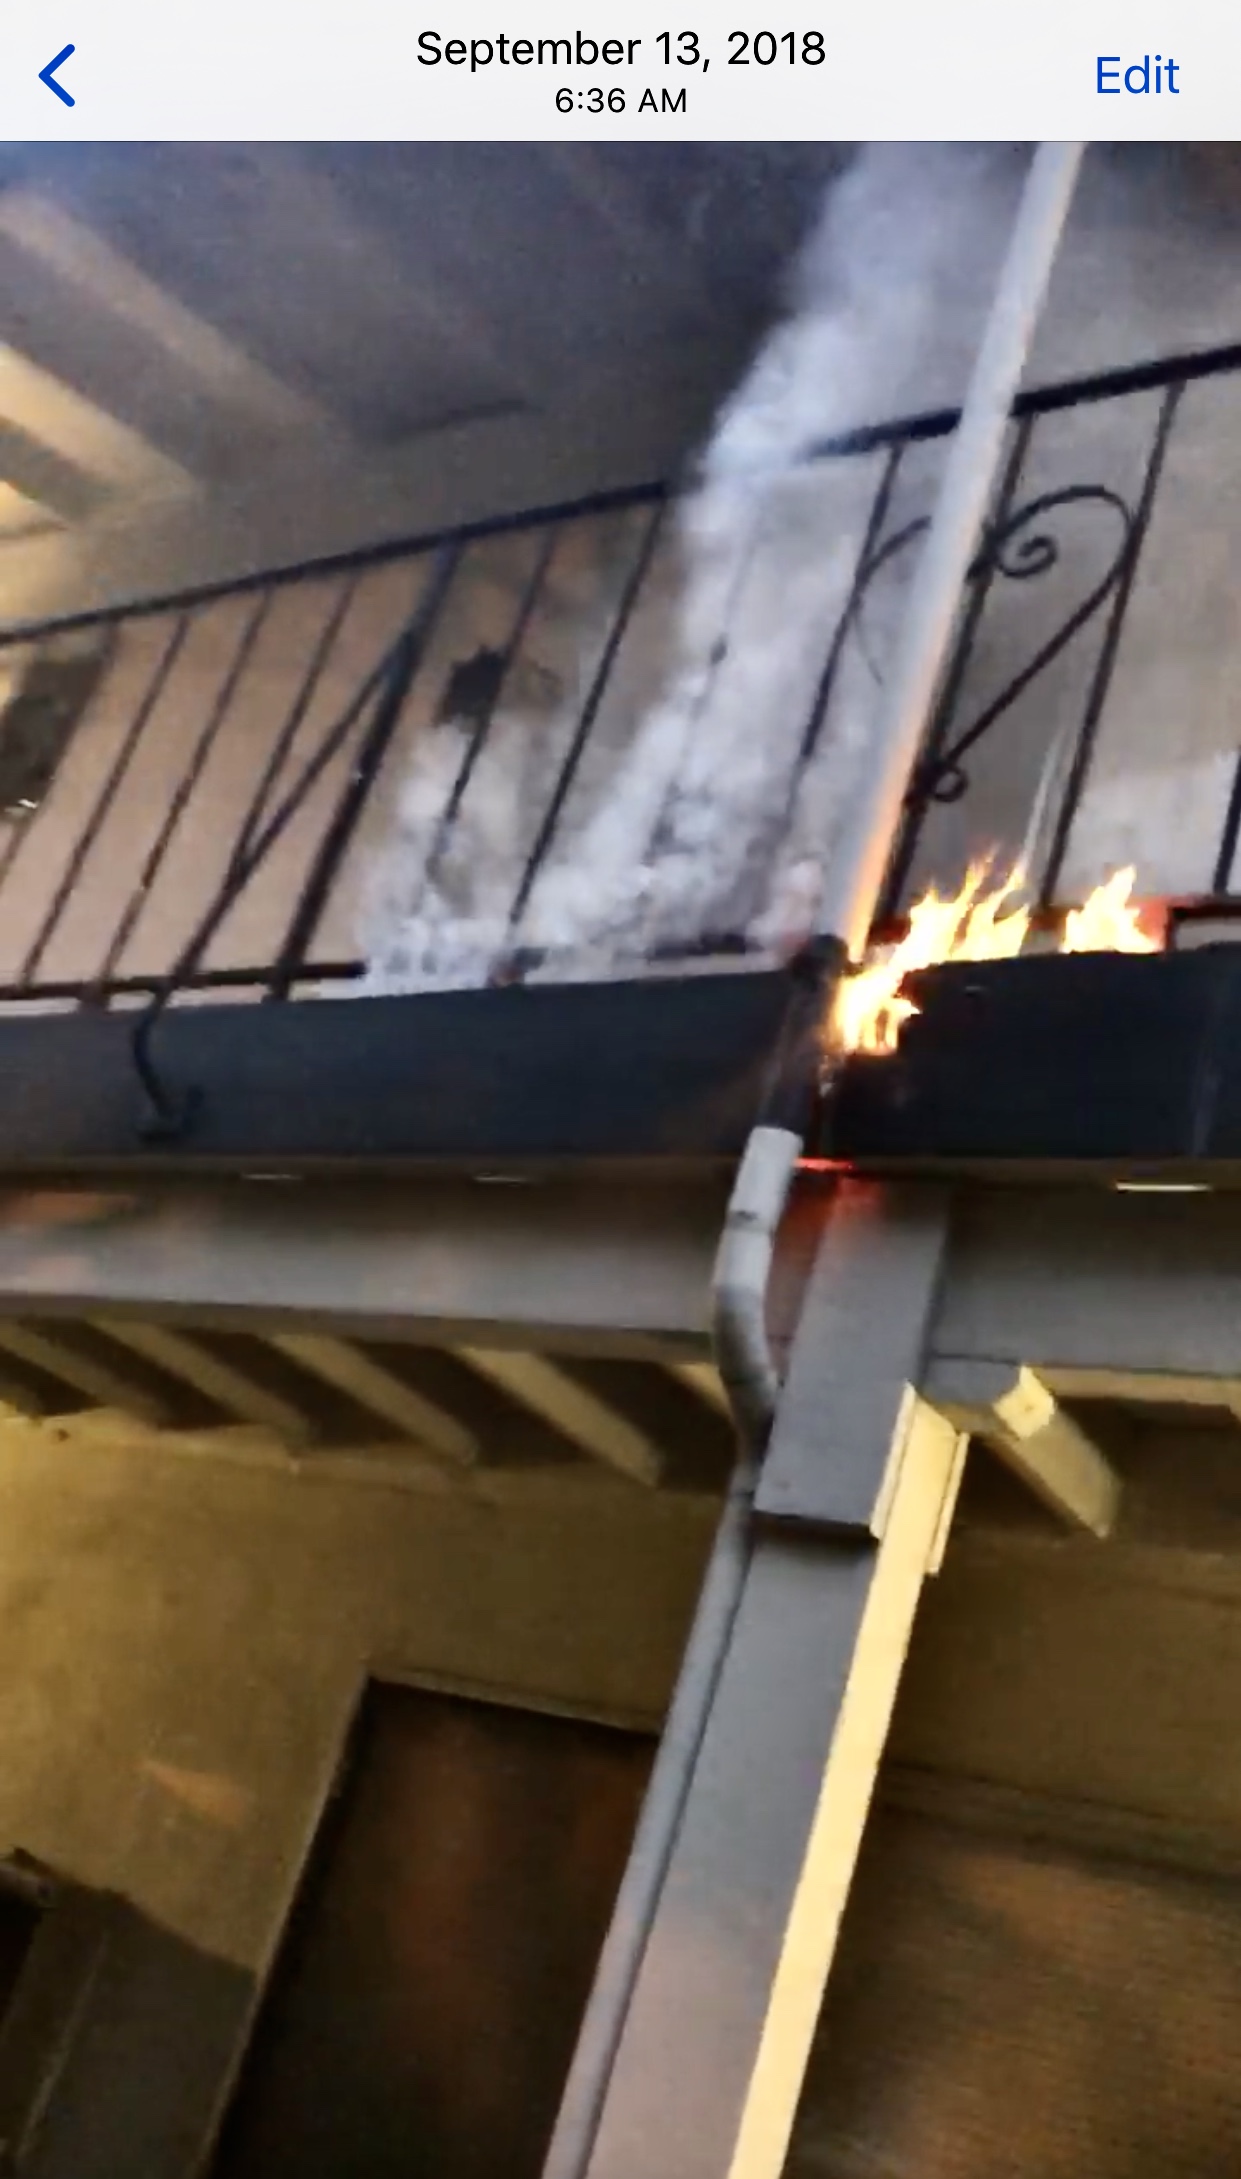 PORCH FIRE SEPTEMBER 13 2018 LANDLORD AL RAGONESI